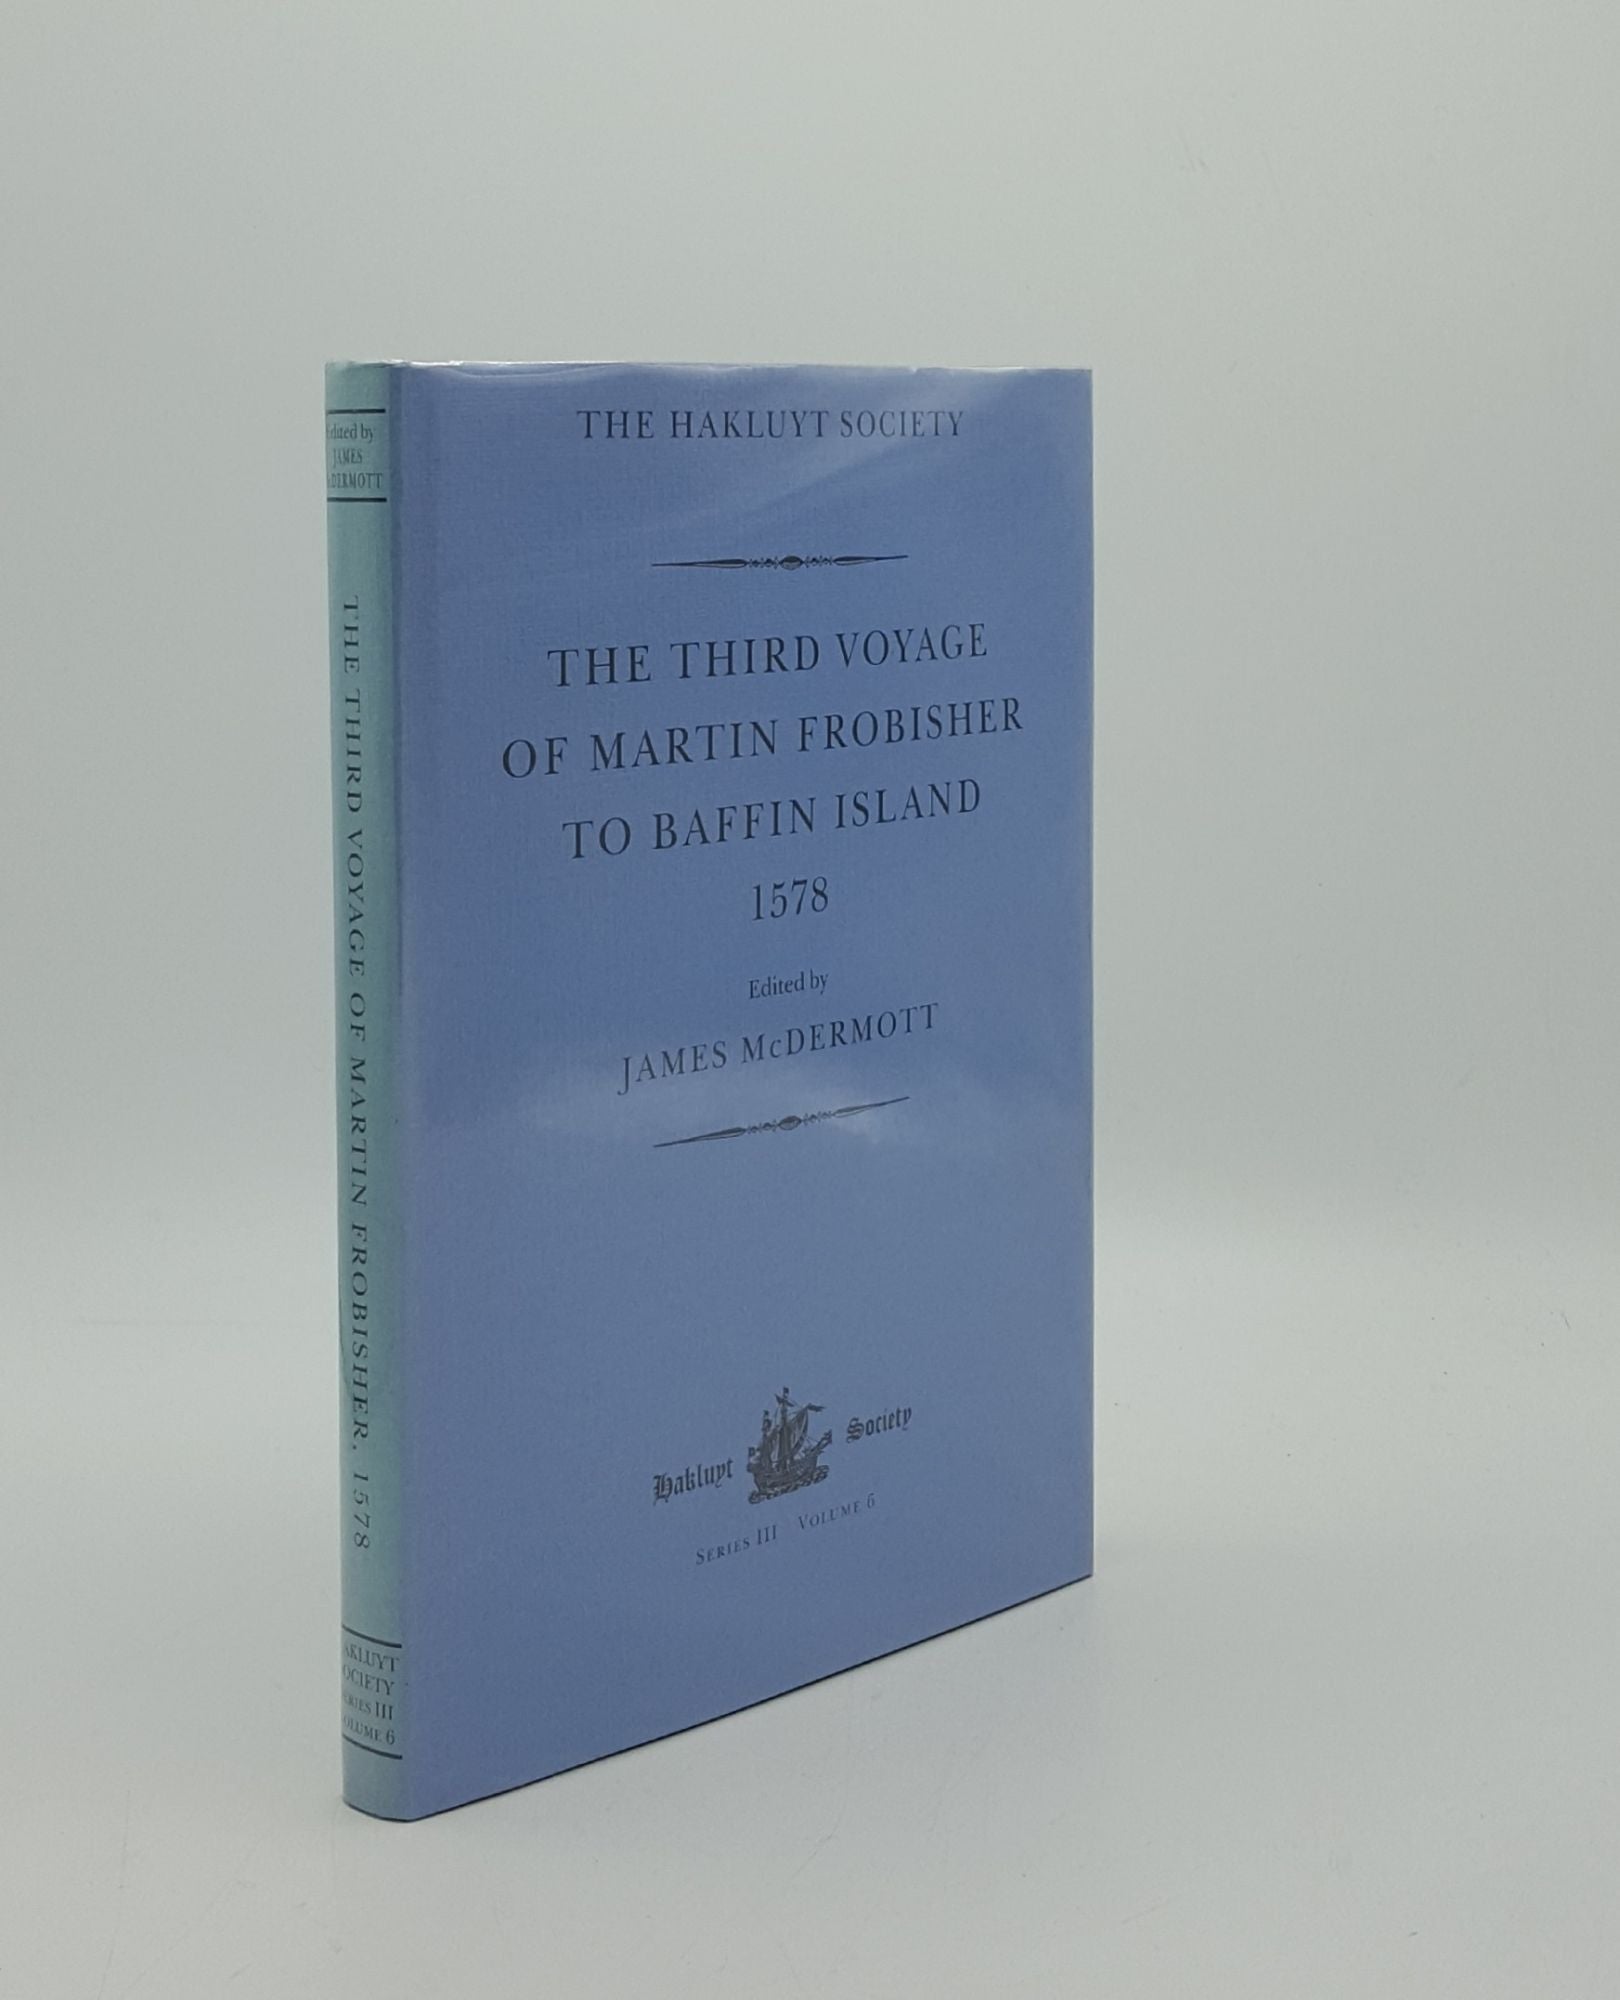 McDERMOTT James - The Third Voyage of Martin Frobisher to Baffin Island 1578